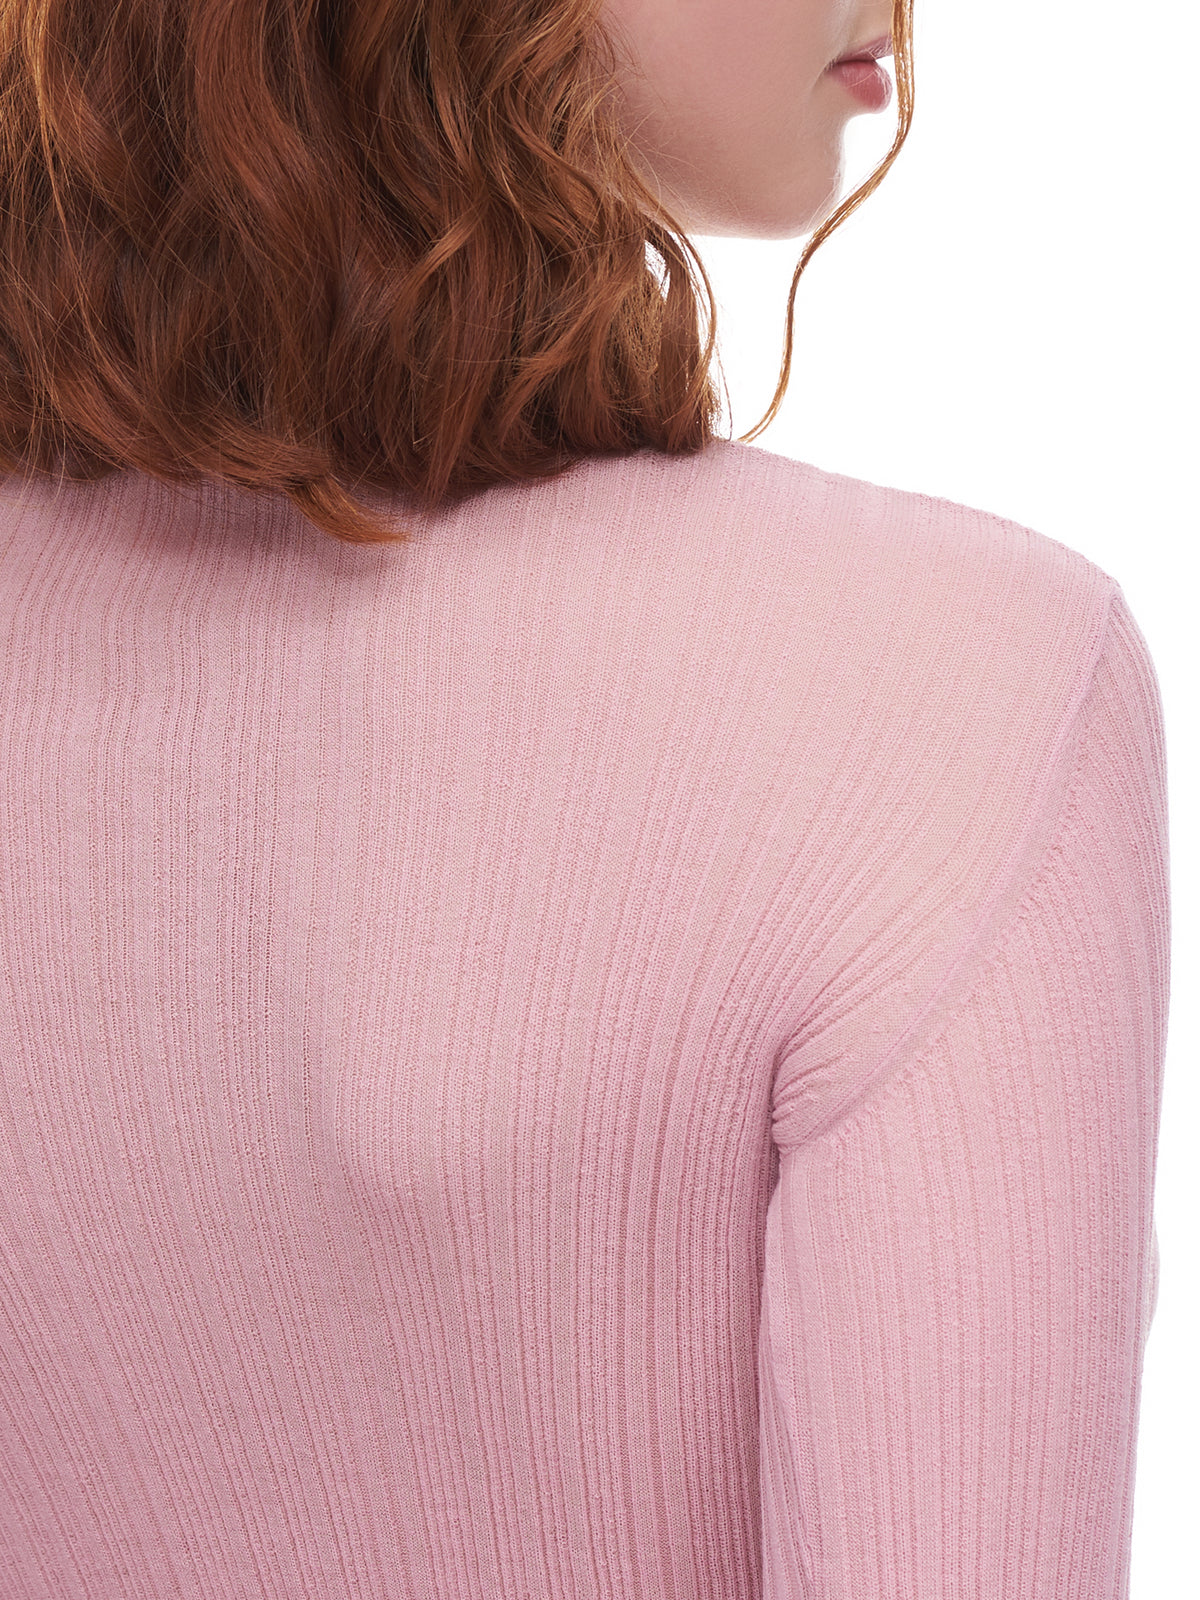 Nina Ricci Transparent Sweater | H. Lorenzo - detail 2